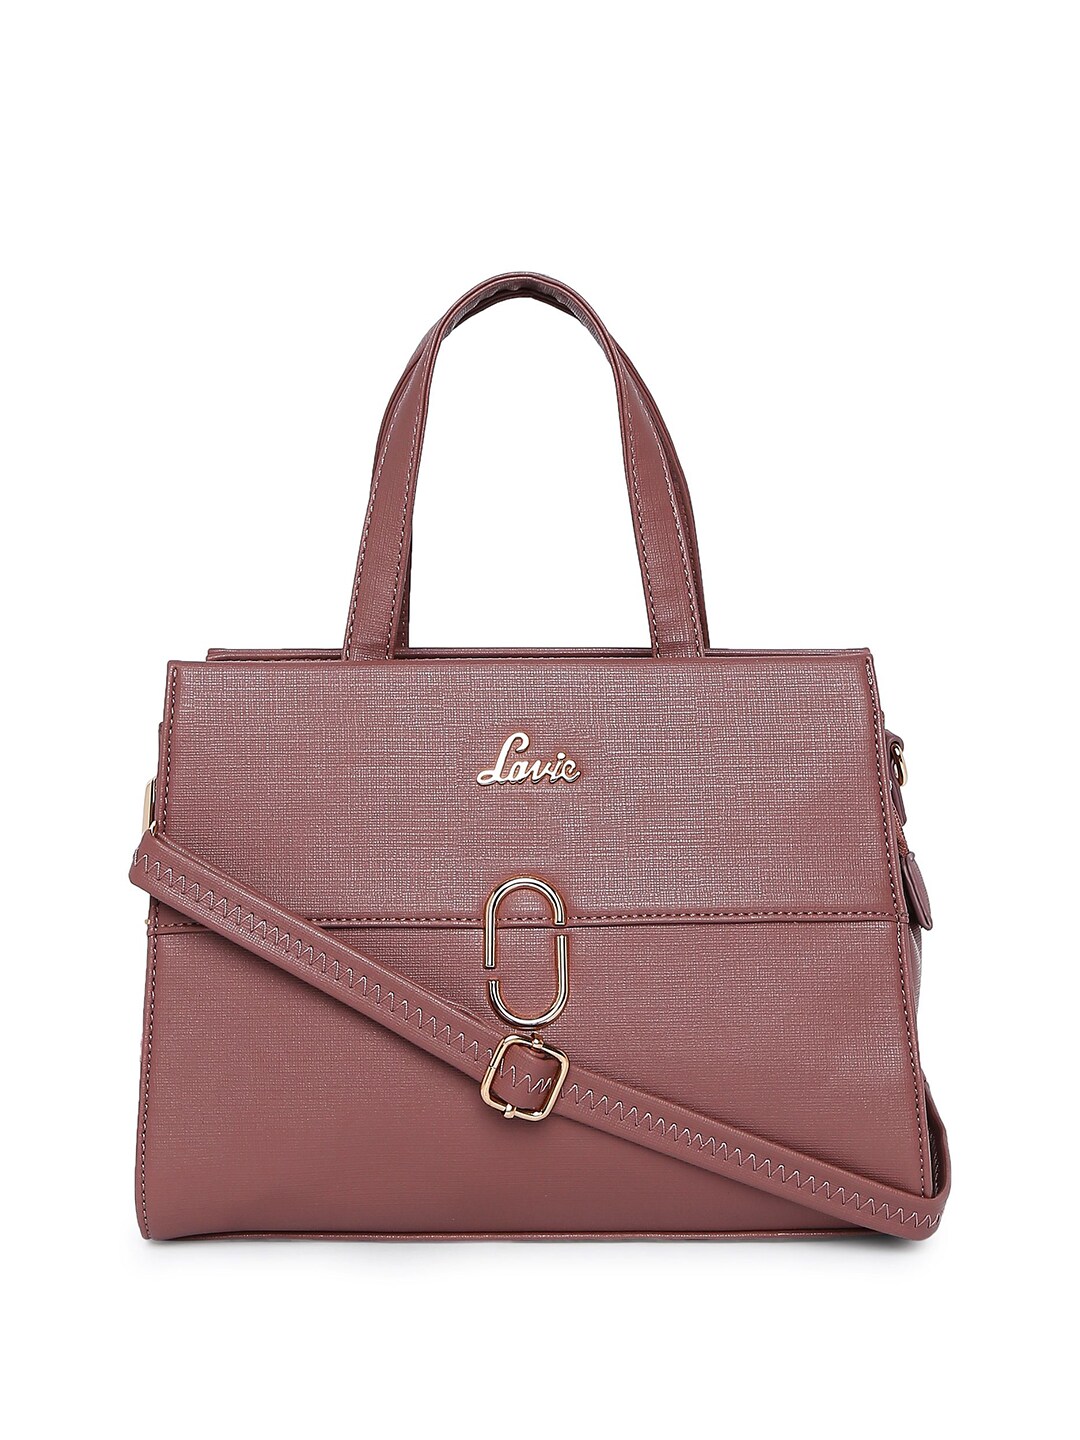 Lavie Pink Solid Handheld Bag Price in India